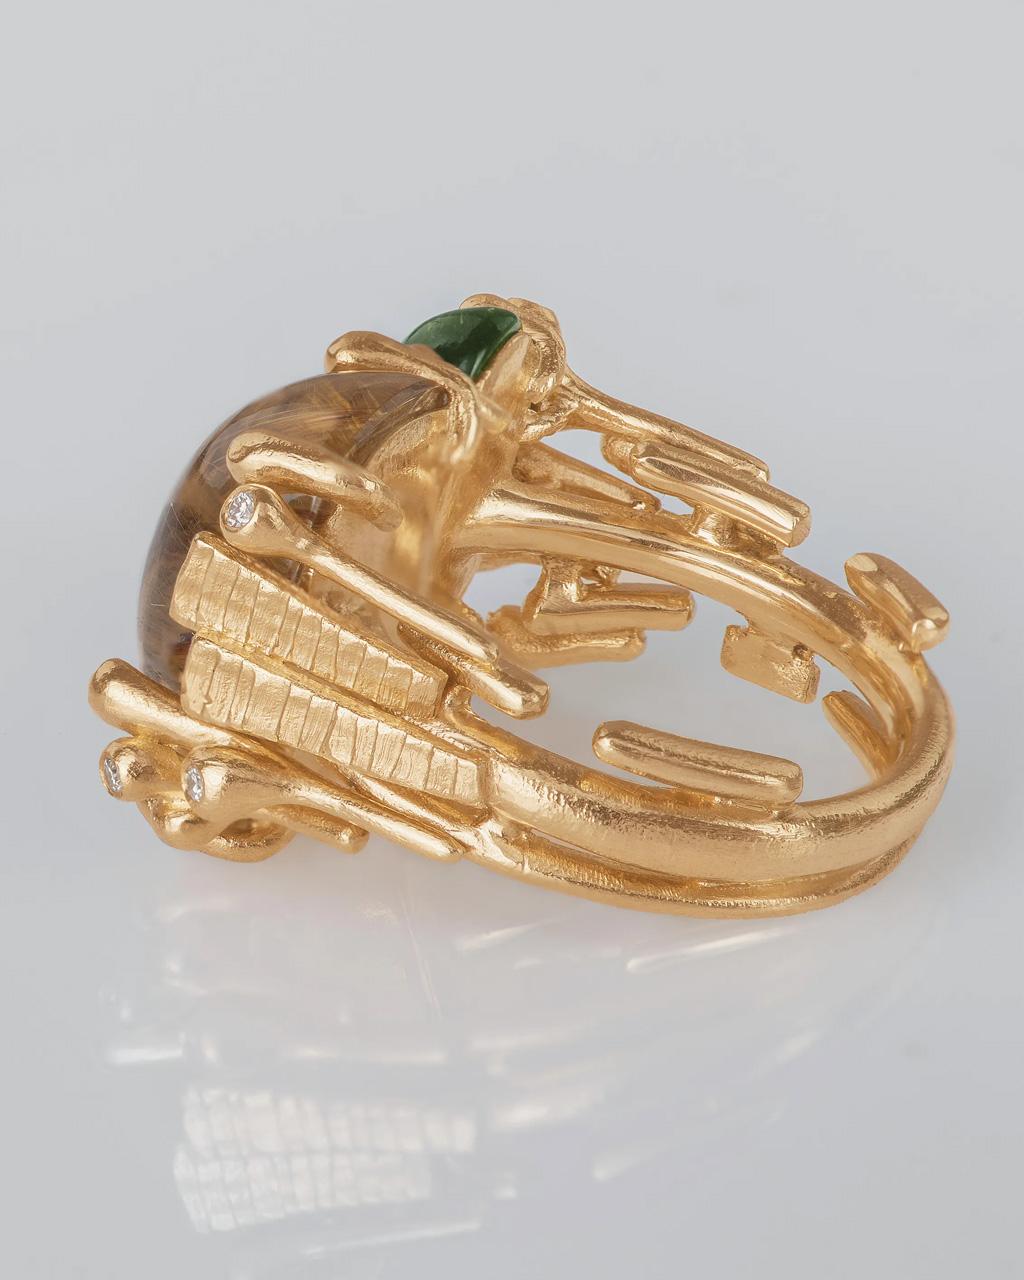 Ole Lynggaard 'BoHo' Ring with Rutile, Green Toumarline and Diamonds